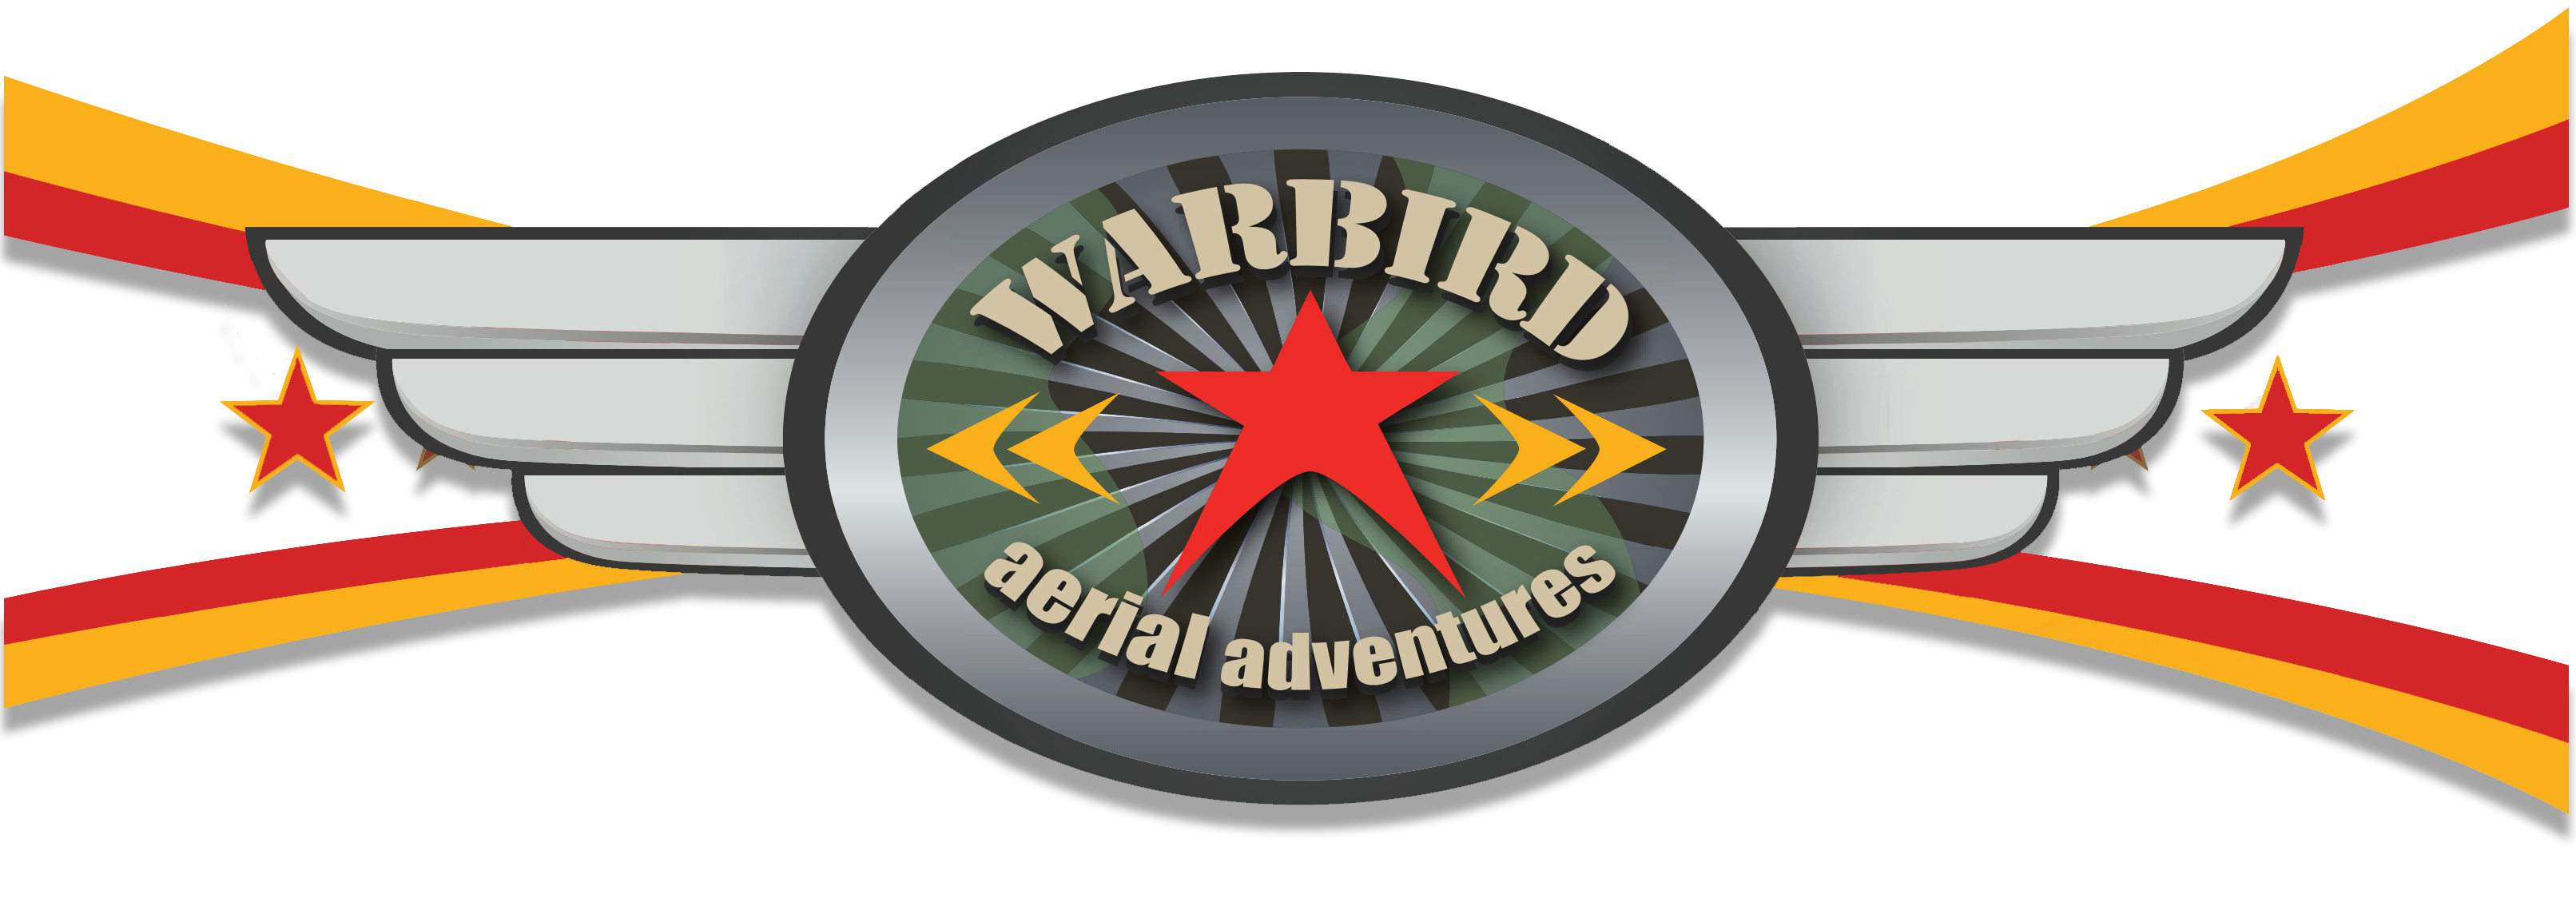 Warbird Aerial Adventures